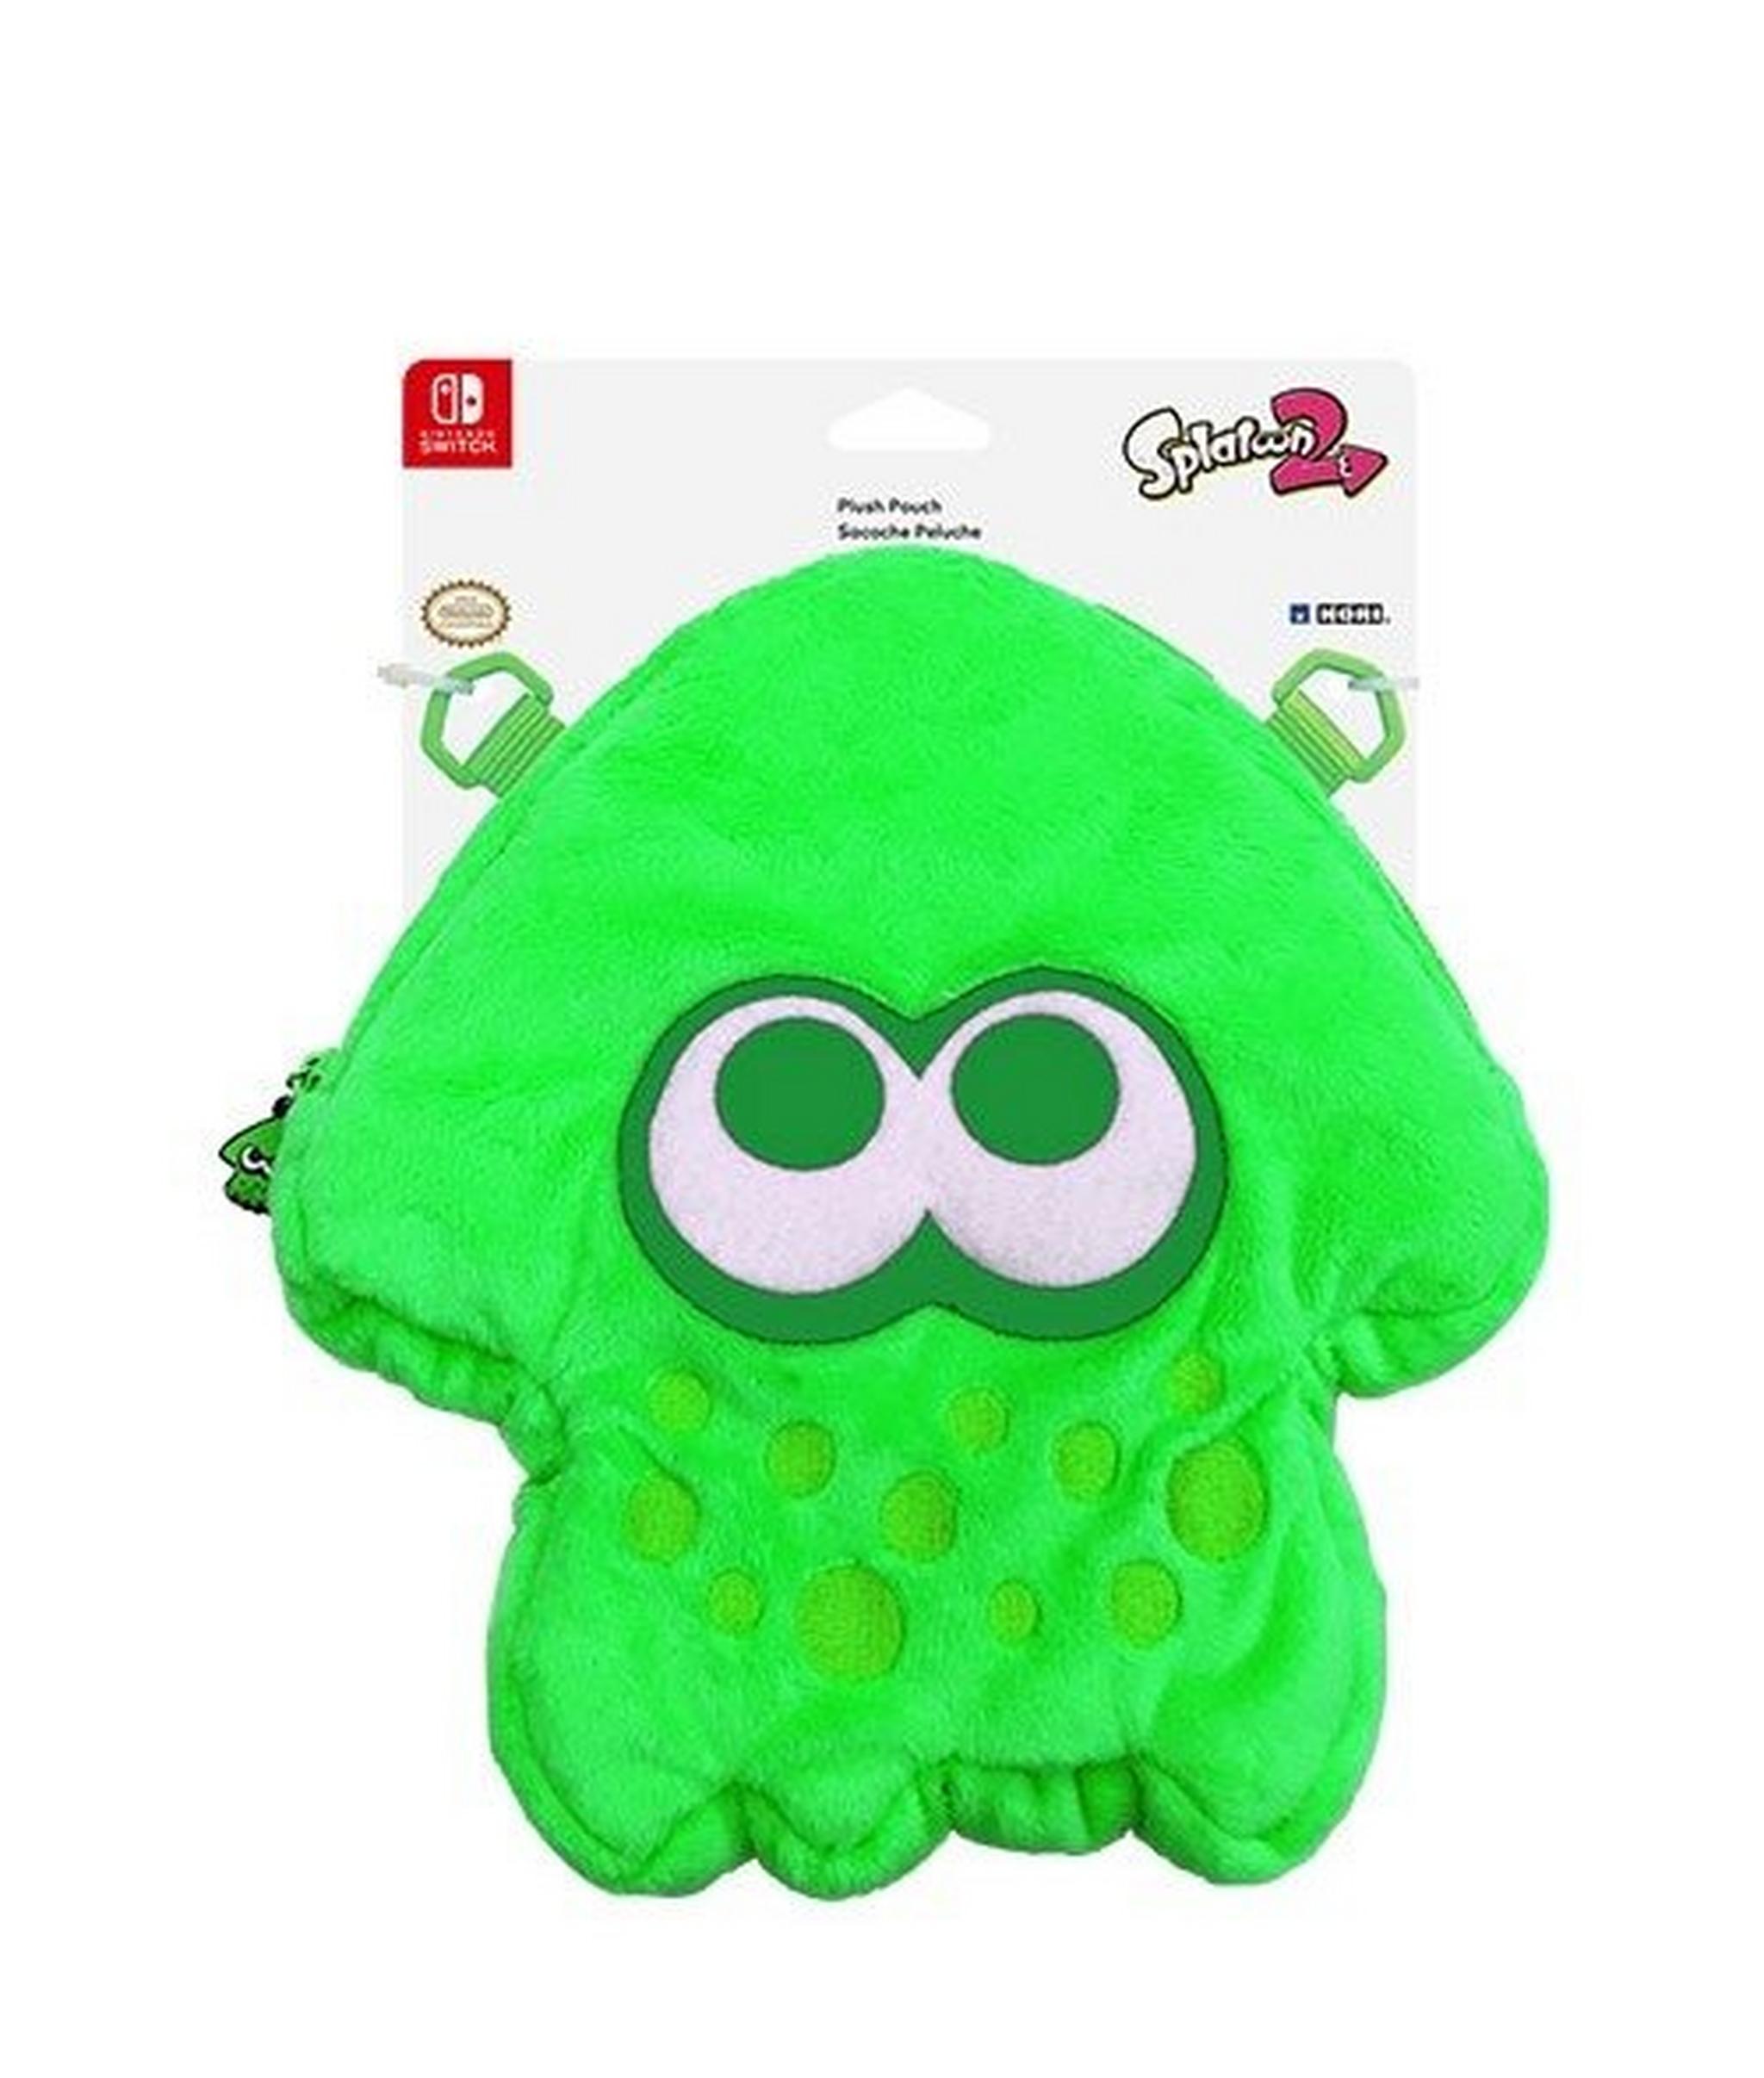 Hori Splatoon 2 Squid Plush Pouch for Nintendo Switch - Neon Green